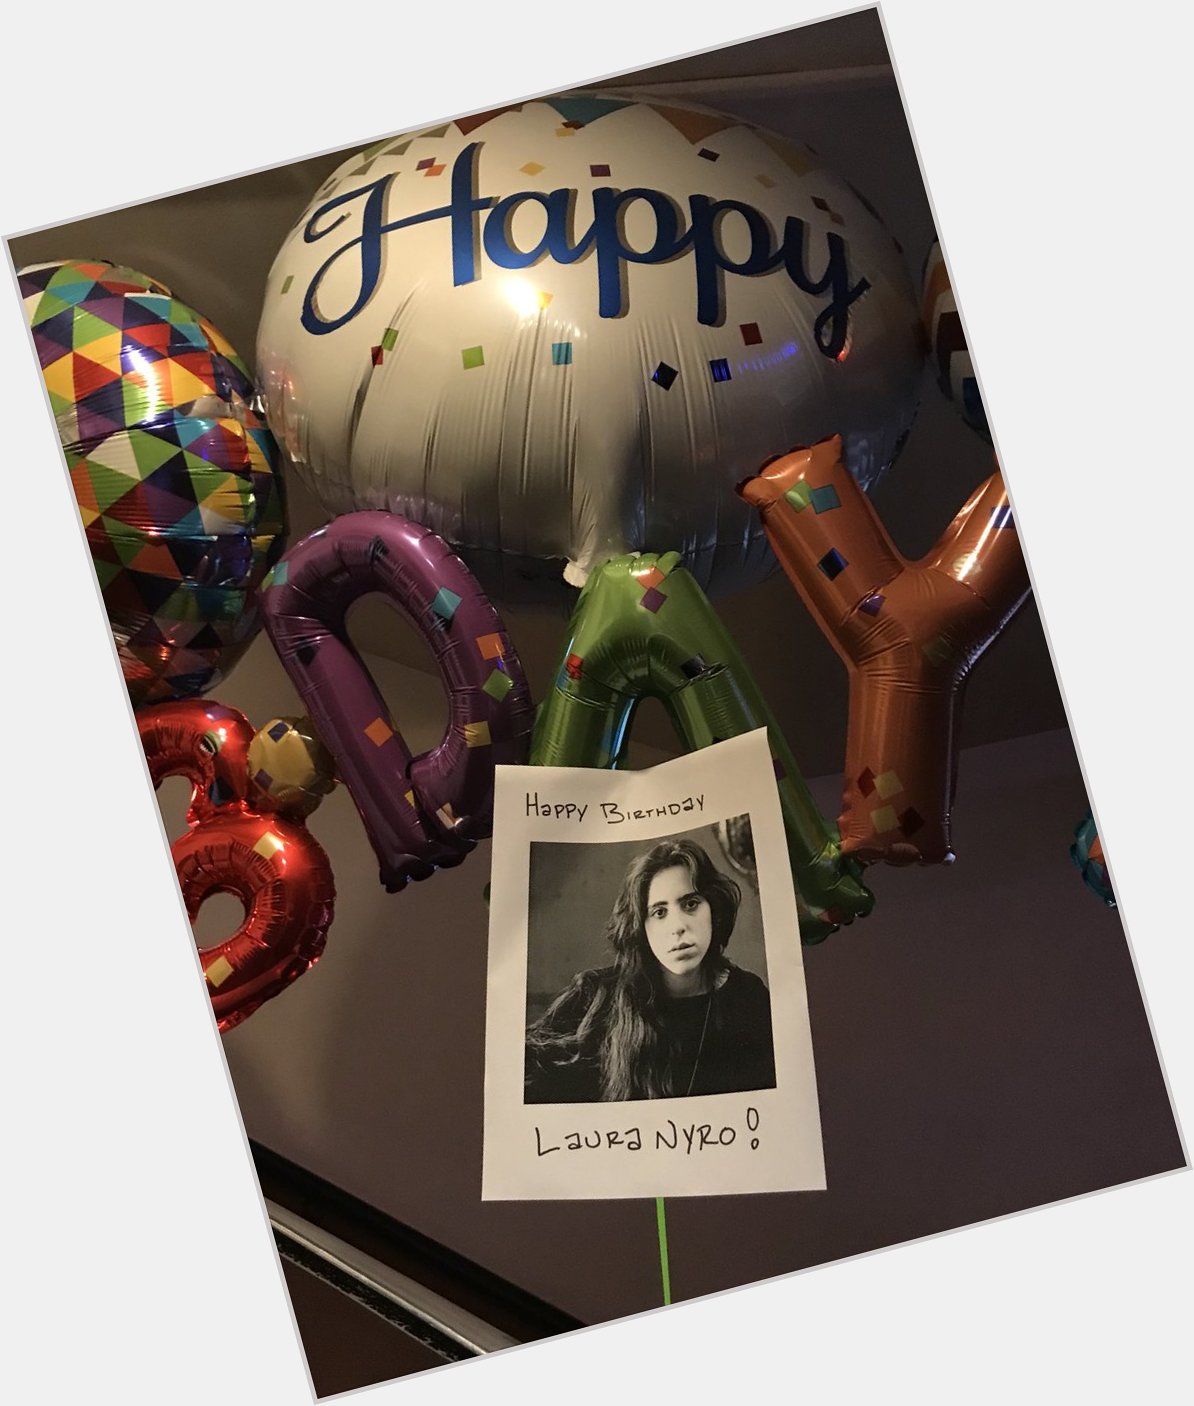 Happy birthday, Laura Nyro! 